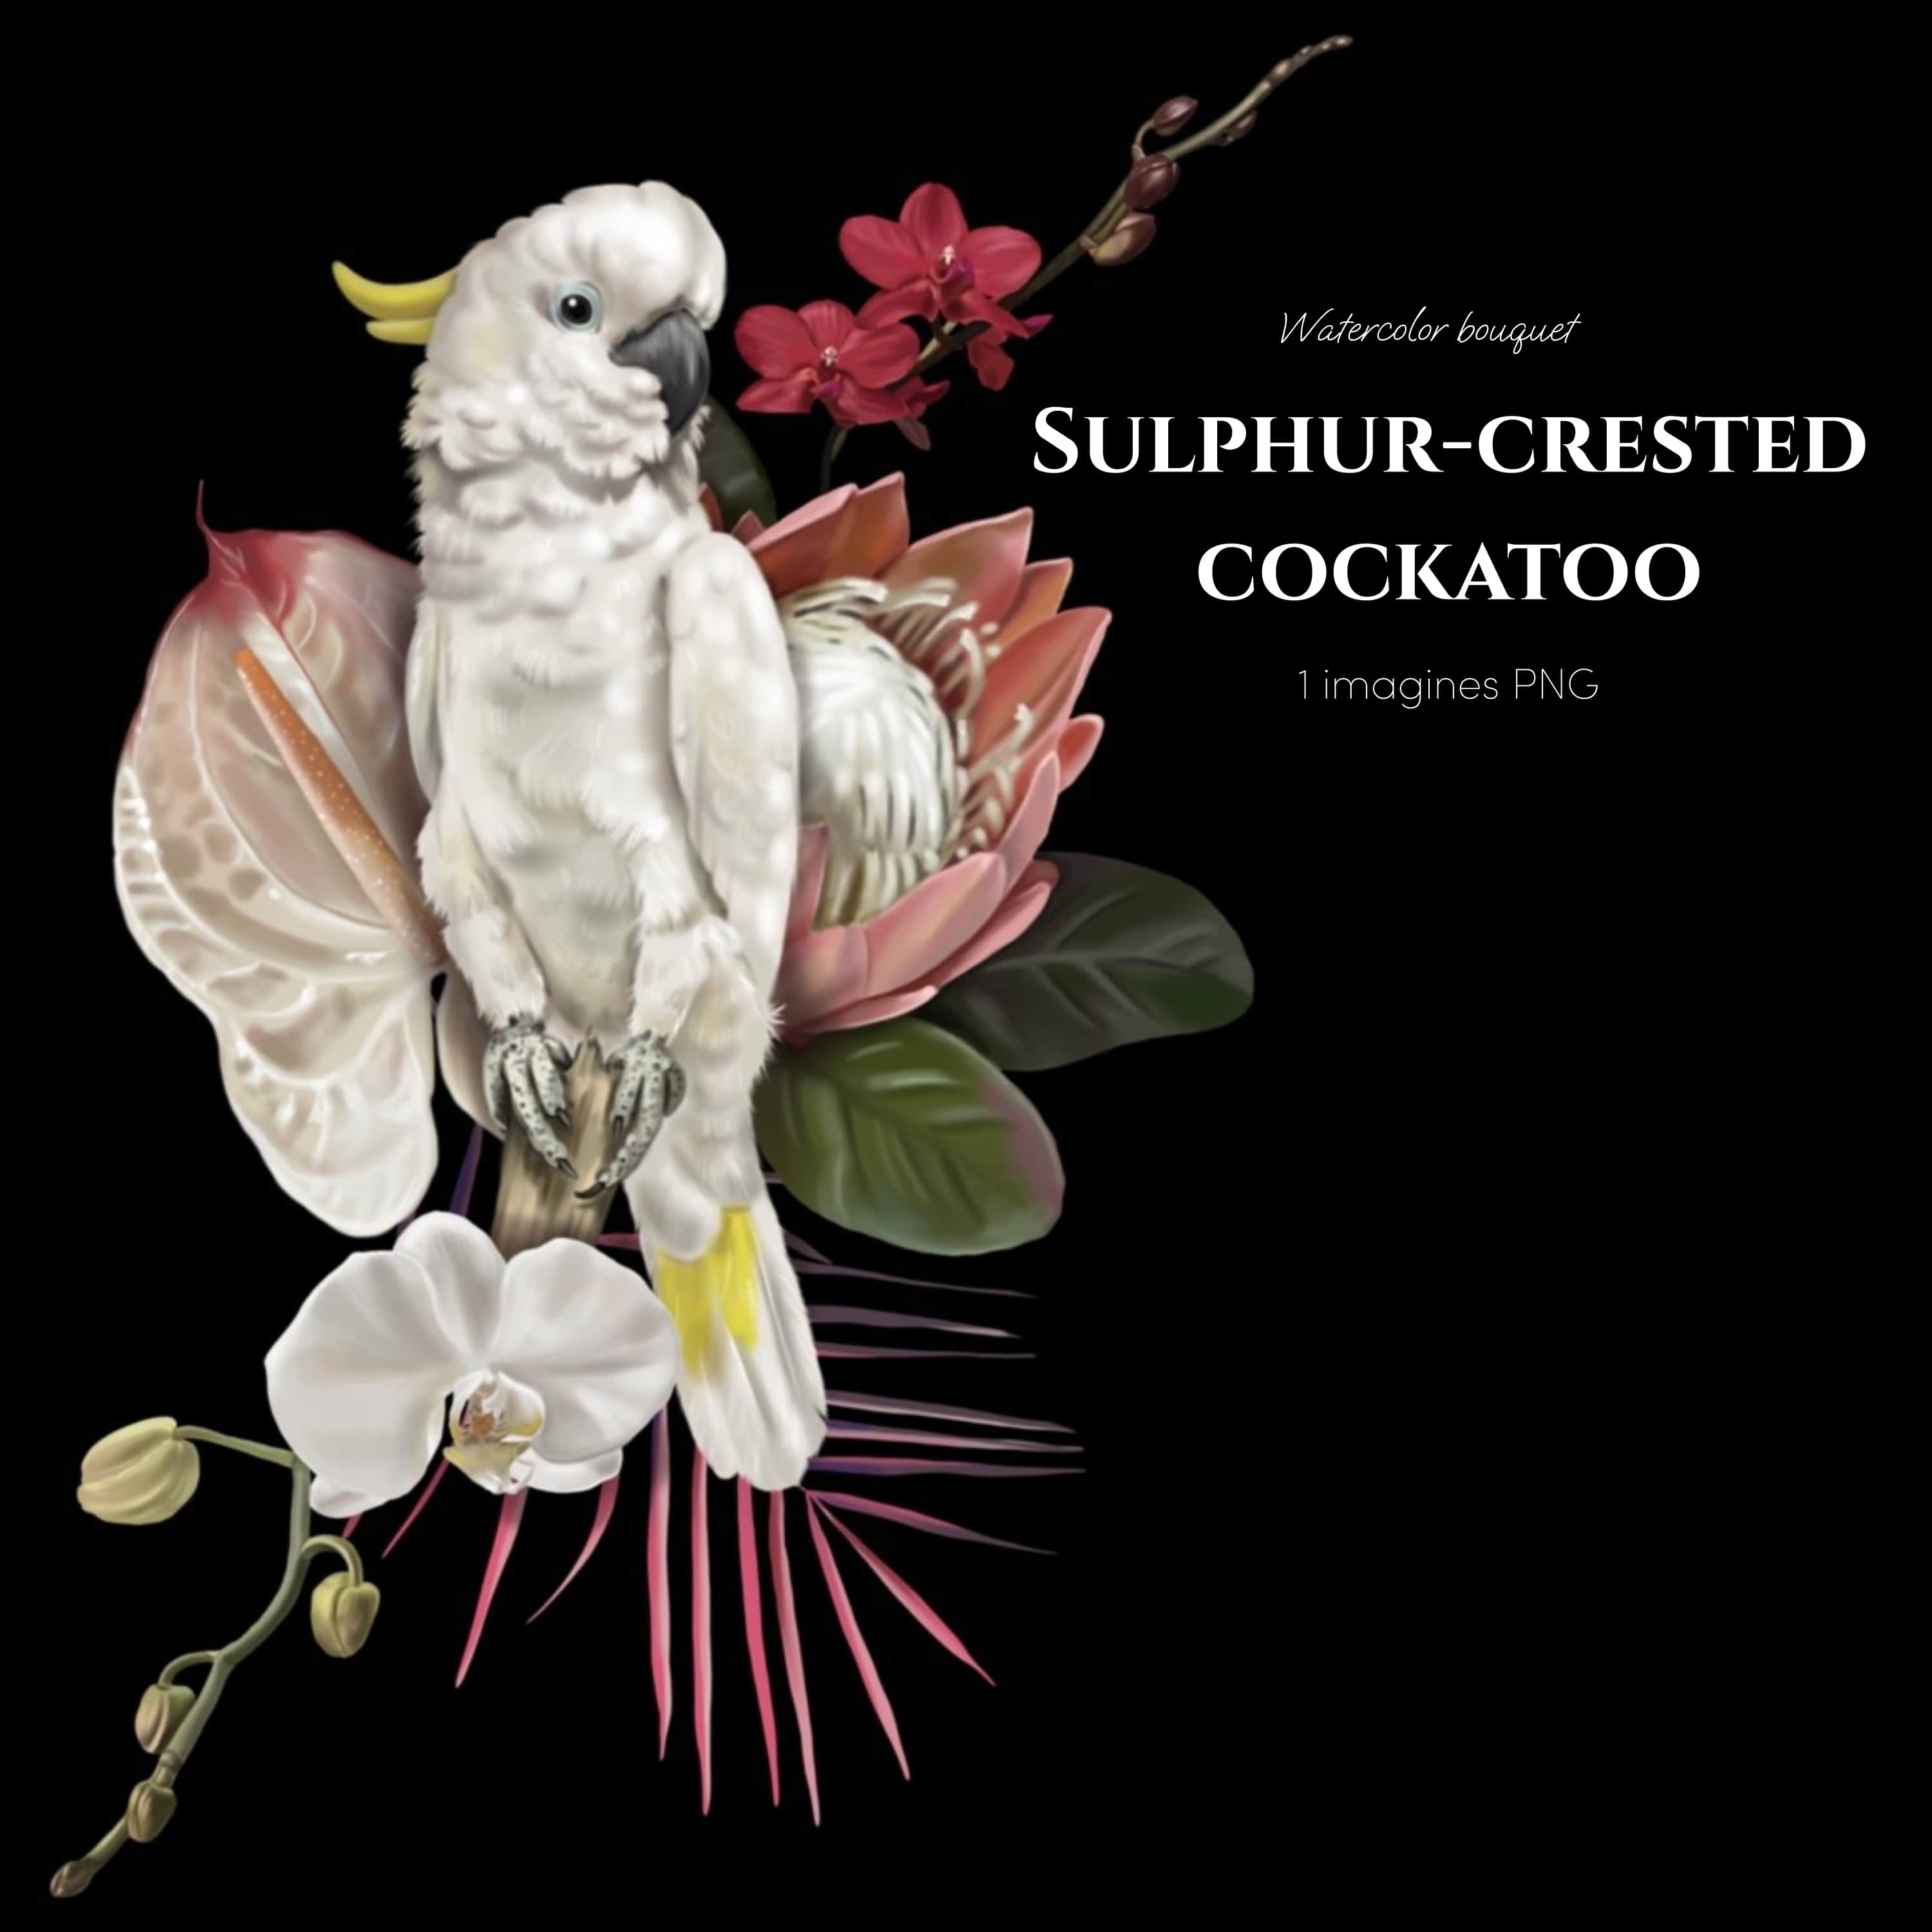 Sulphur-crested cockatoo Parrot, Watercolor bouquet clipart cover.